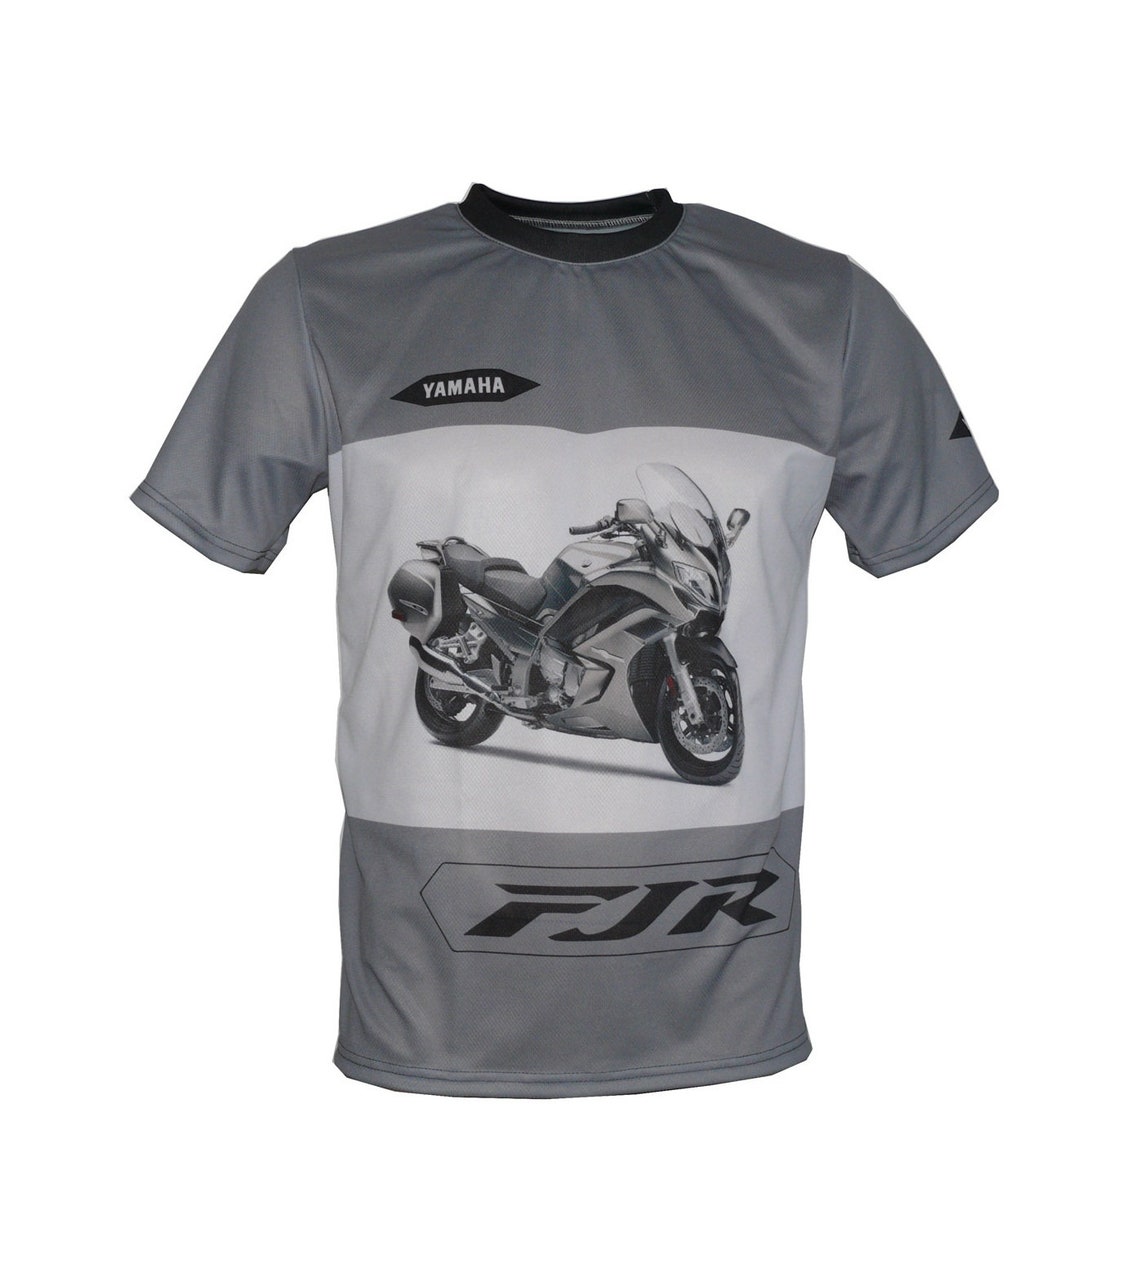 Yamaha FJR 1300 3d All Over Print T-shirt Overall Shirt - Etsy